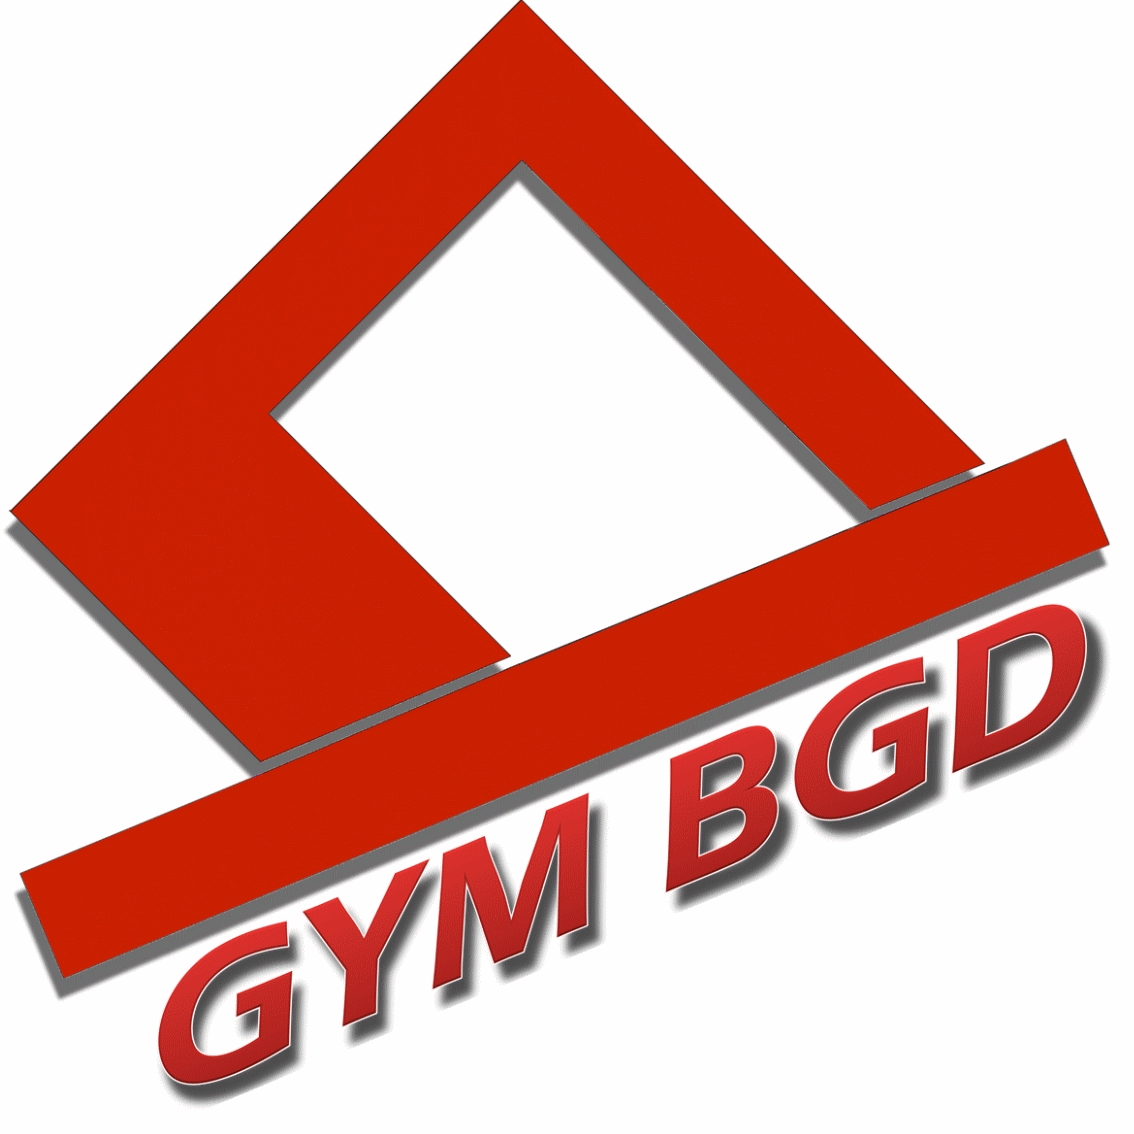 Gymnasium Berchtesgaden Logo